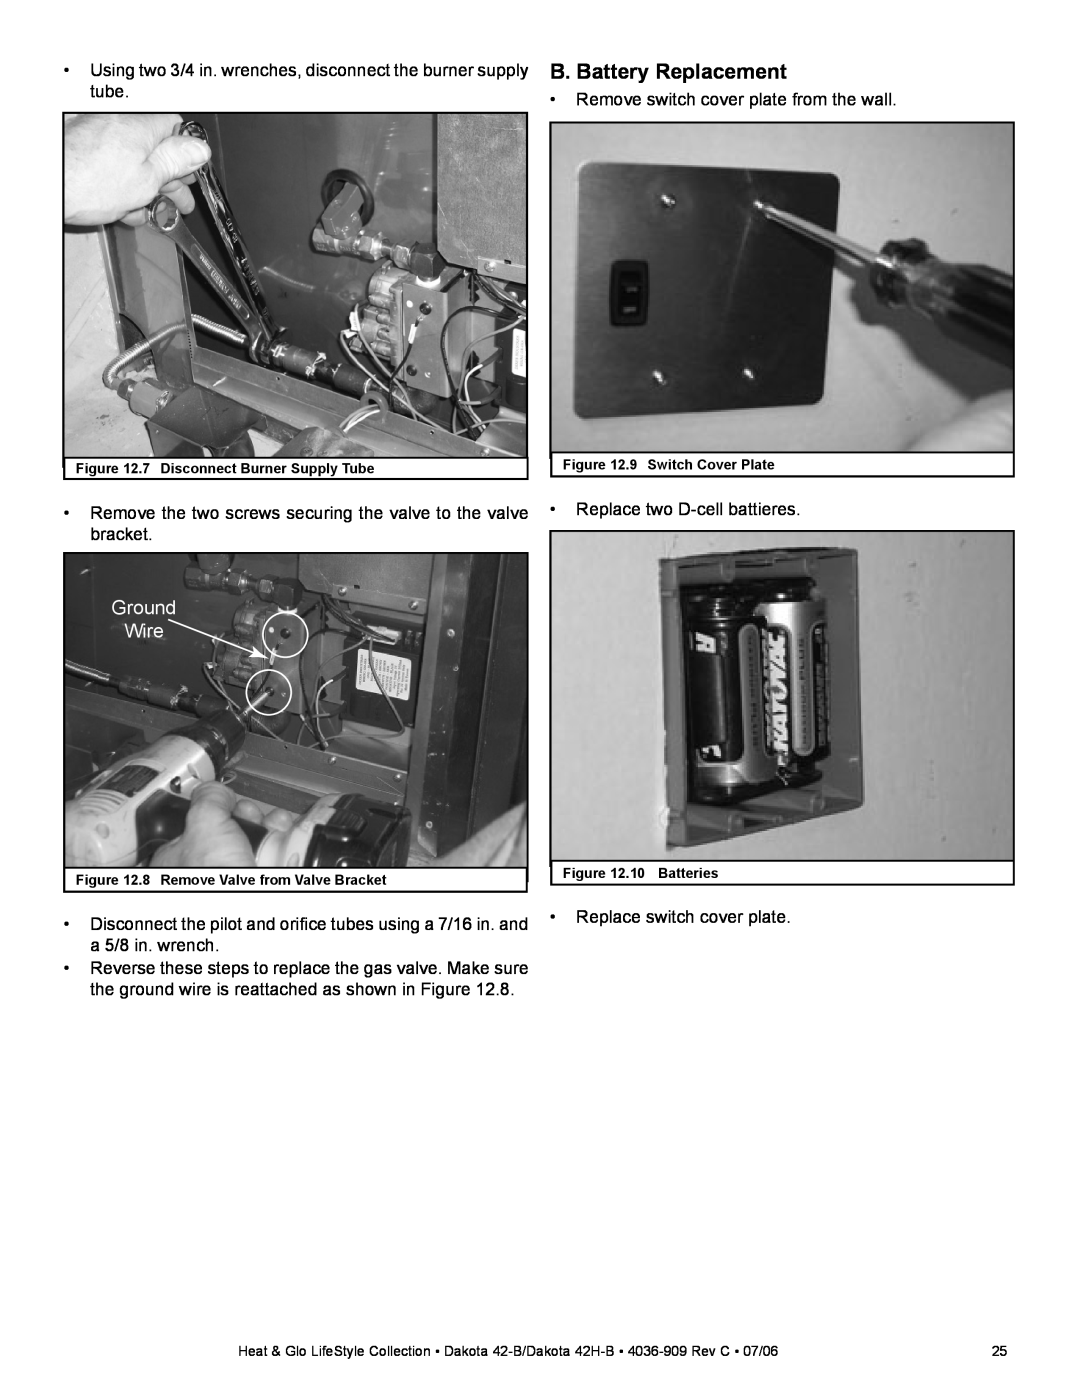 Heat & Glo LifeStyle Dakota 42-B, Heat & Glo Gas Appliance, Dakota 42H-B owner manual Ground Wire 